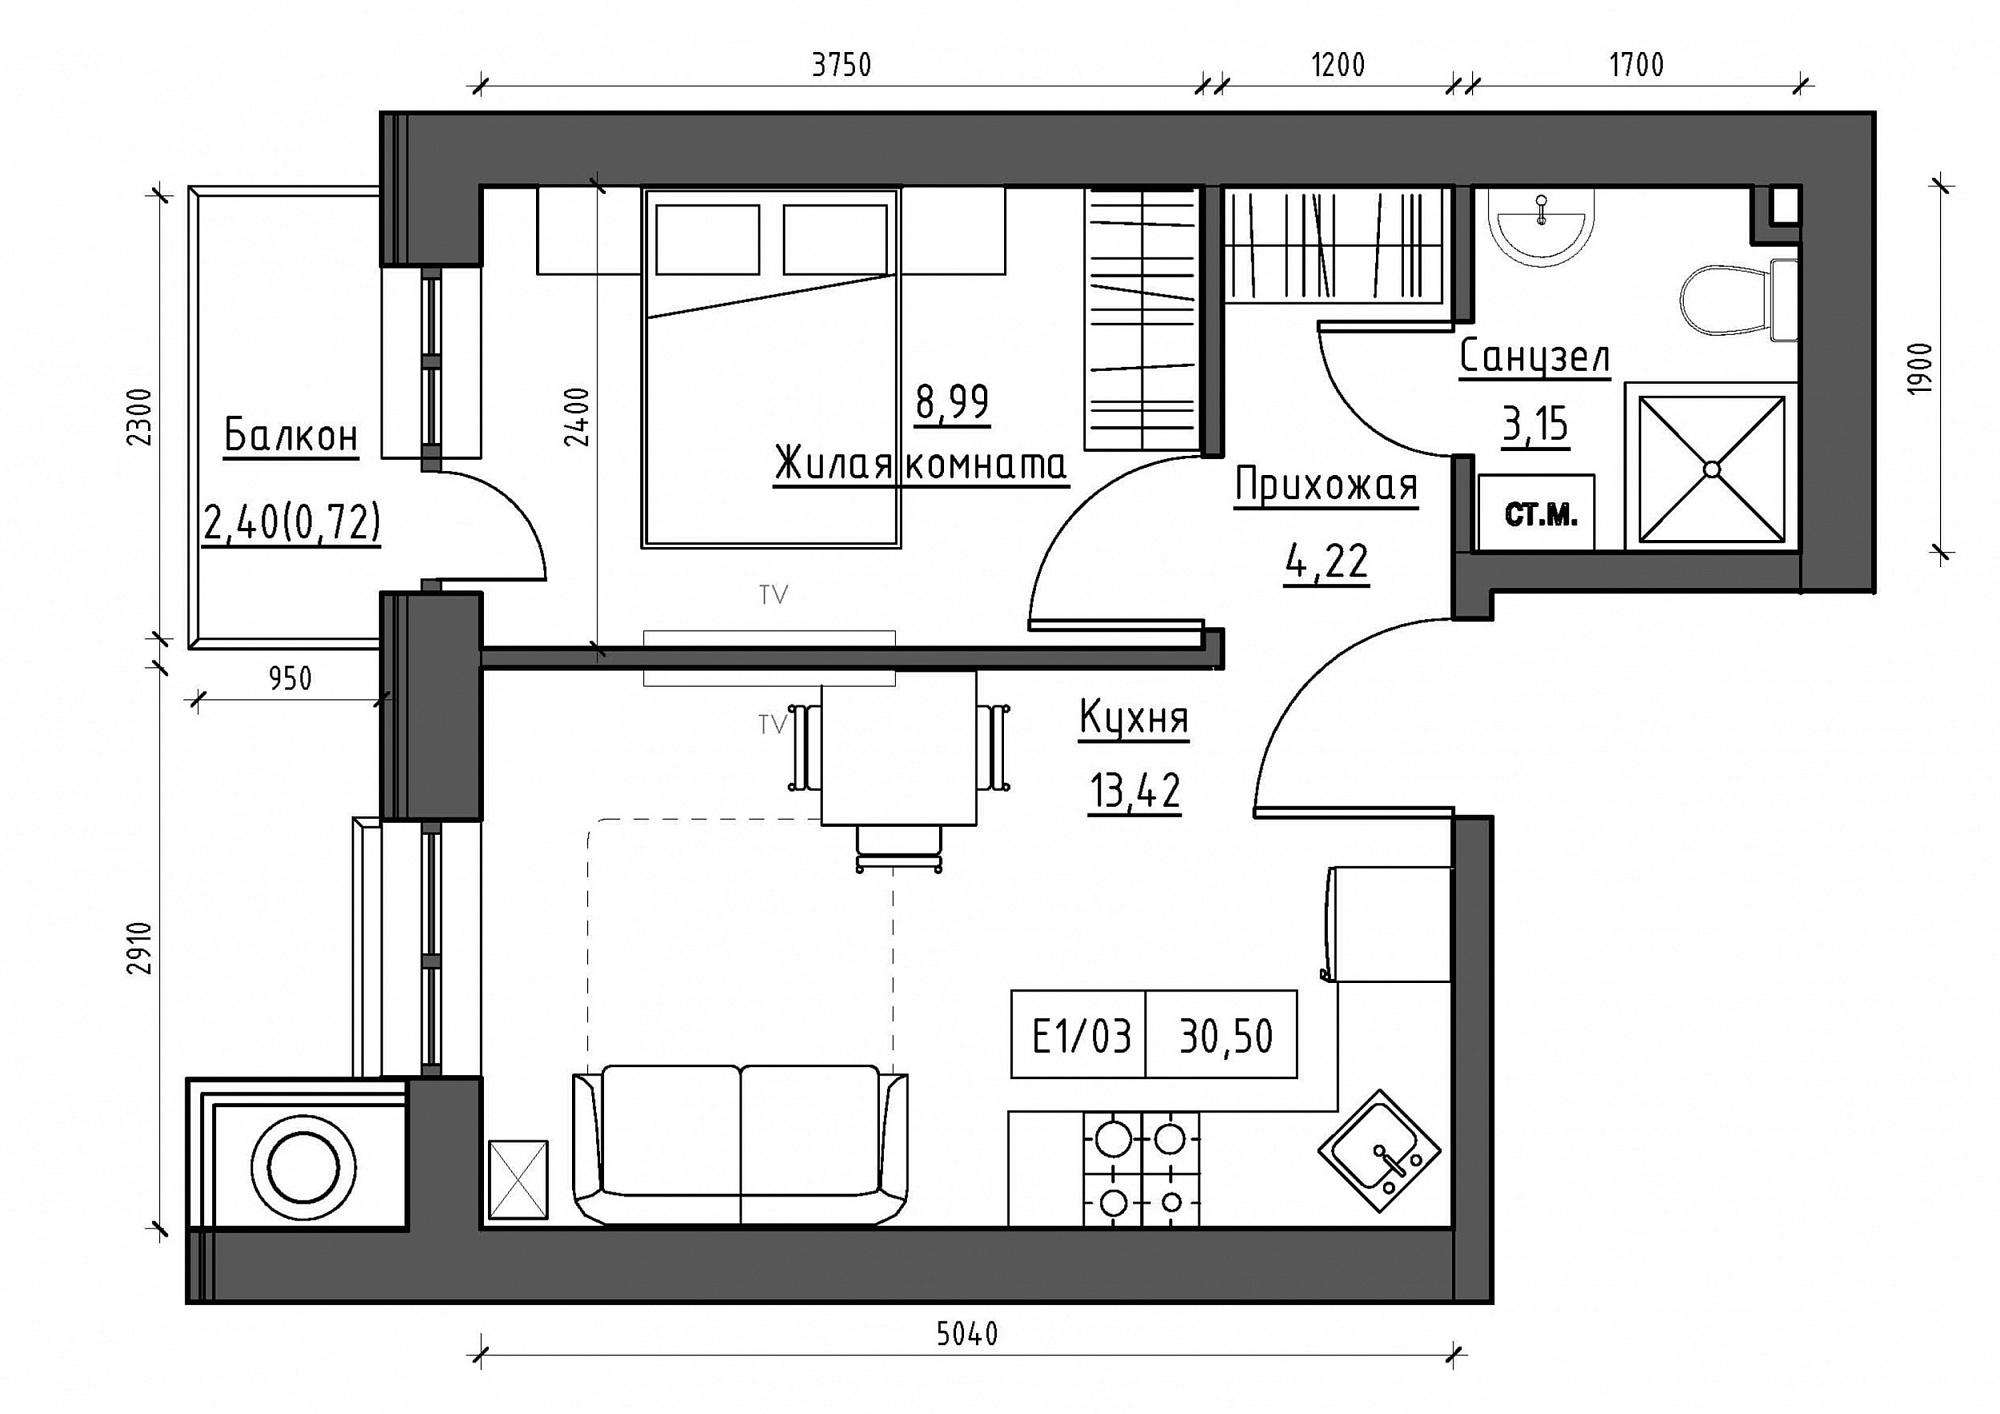 Planning 1-rm flats area 30.5m2, KS-011-04/0003.